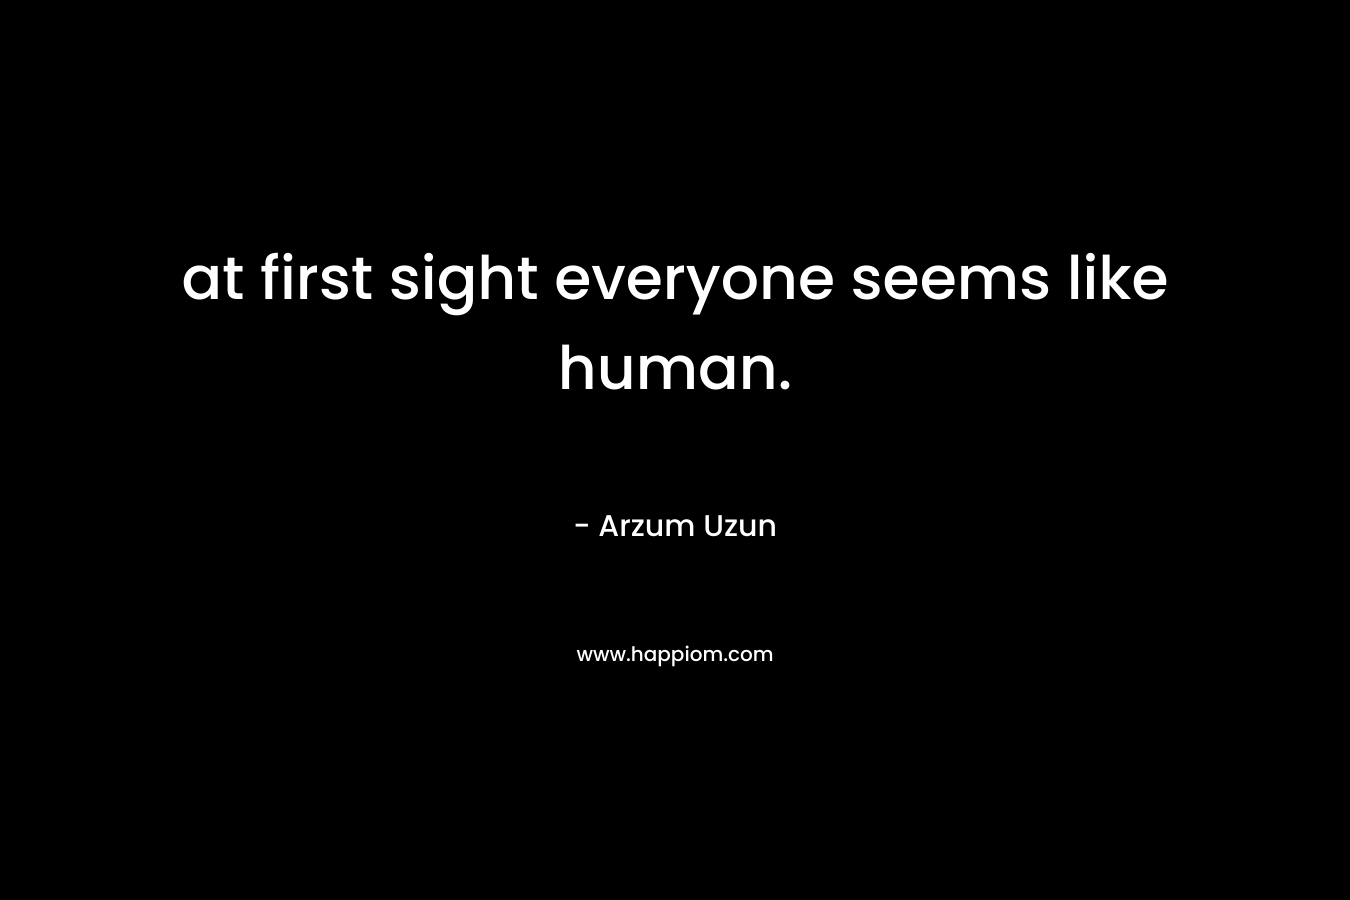 at first sight everyone seems like human.